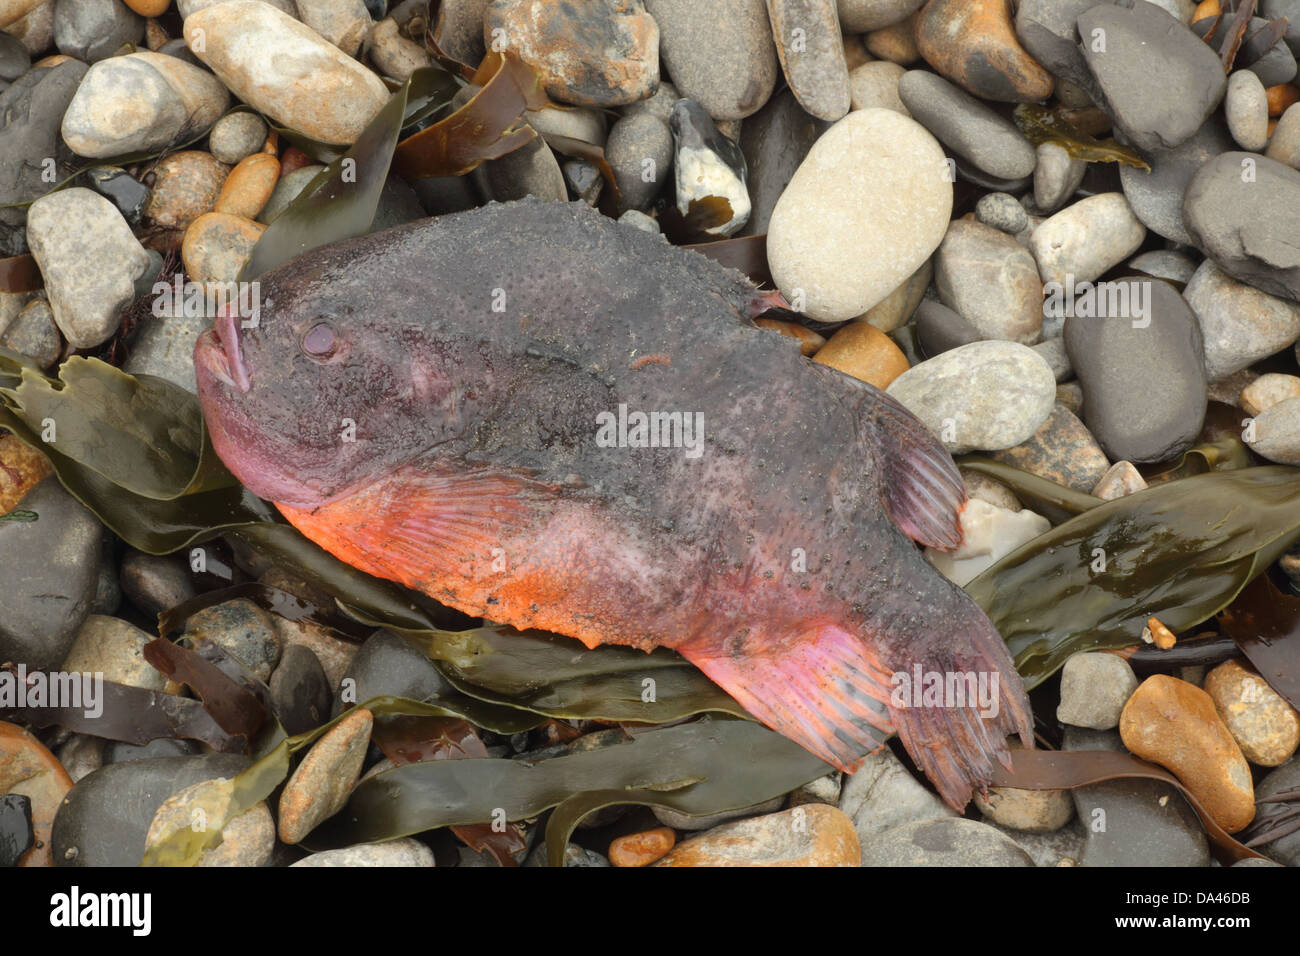 Lumpsucker (Cyclopterus lumpus) dead adult, washed up on beach strandline, Kimmeridge, Isle of Purbeck, Dorset, England, April Stock Photo